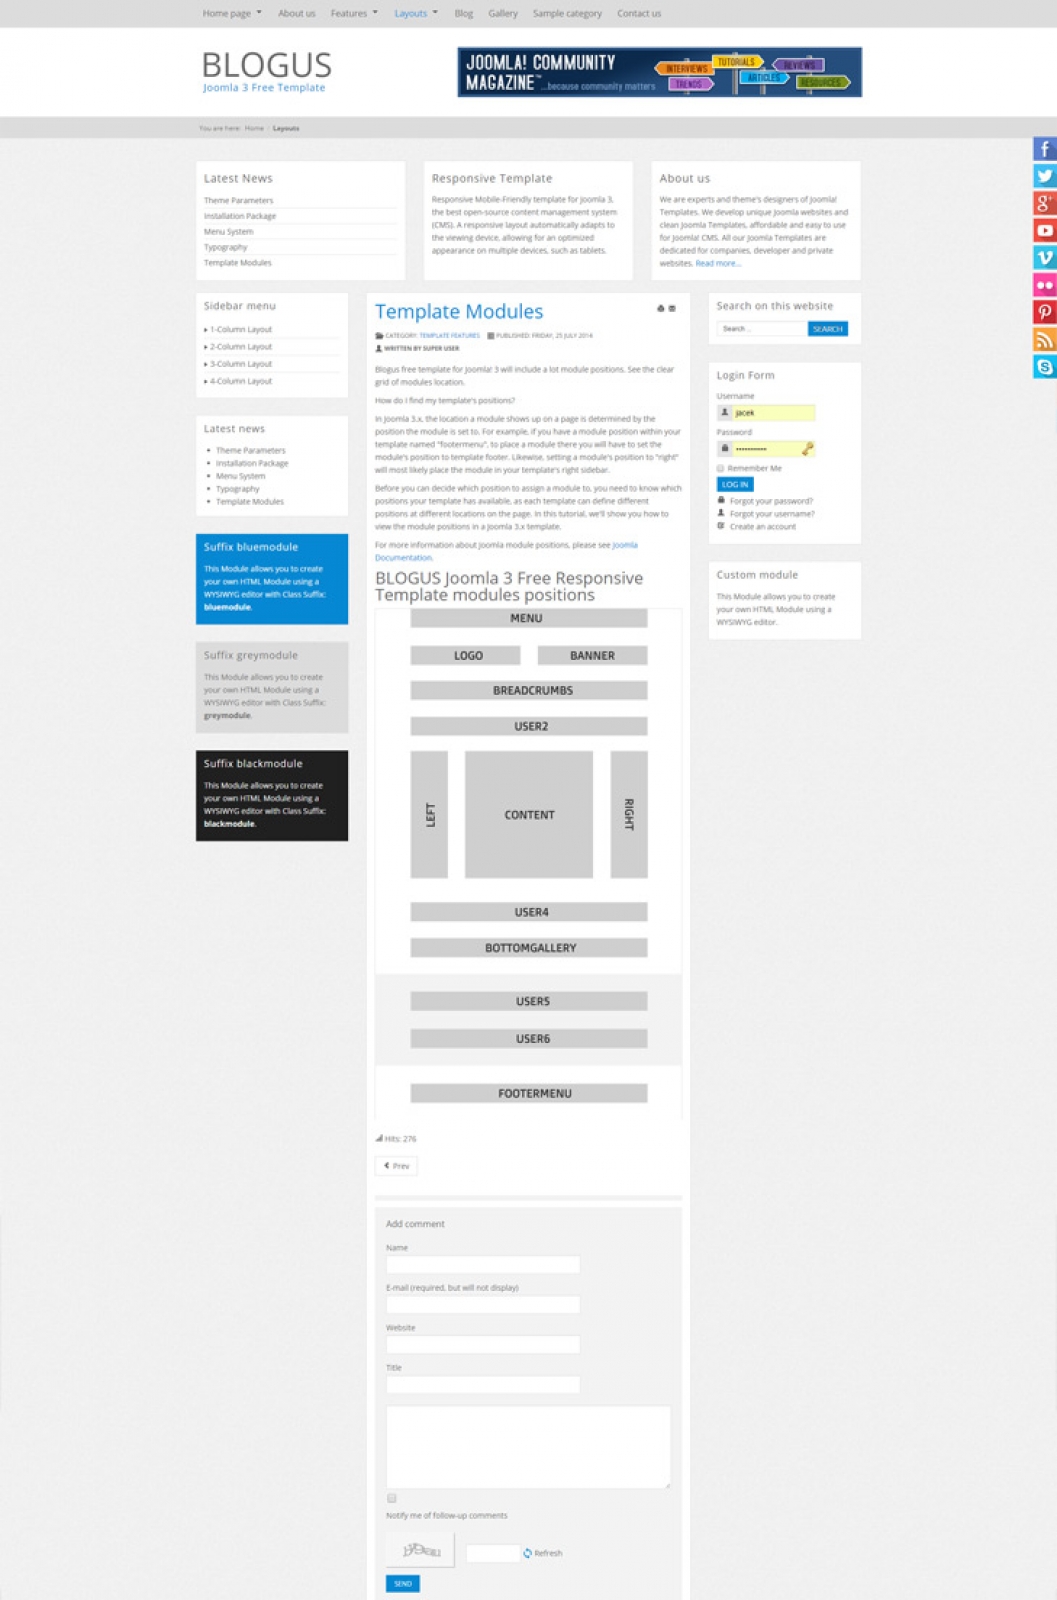 Blogus Joomla 3 Free Template - Layout
